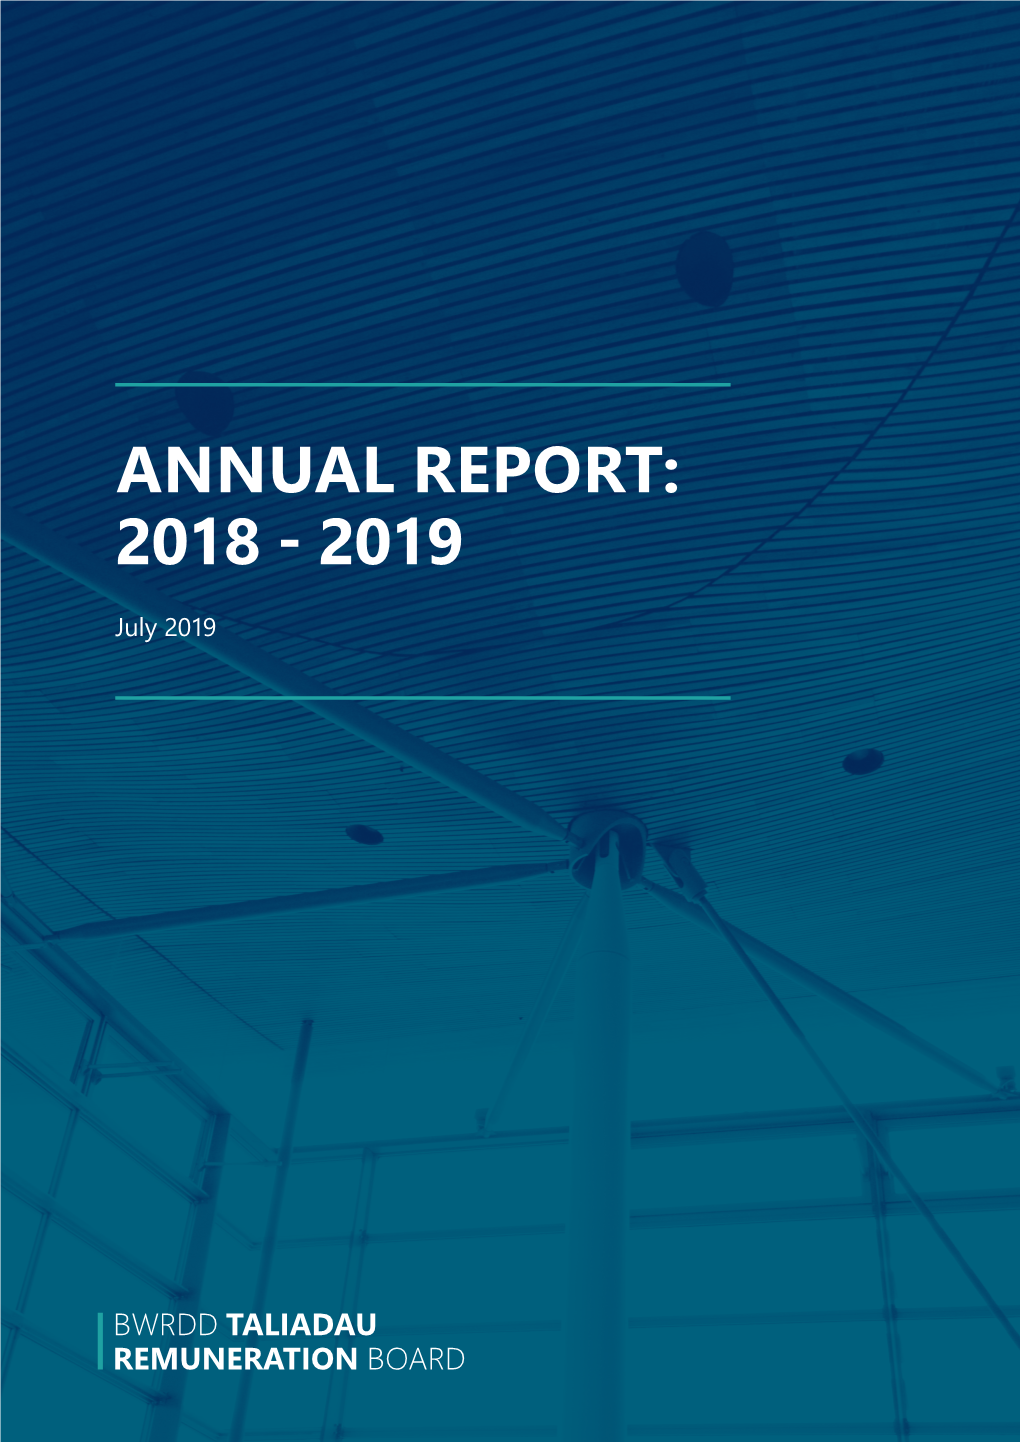 Annual Report: 2018 - 2019